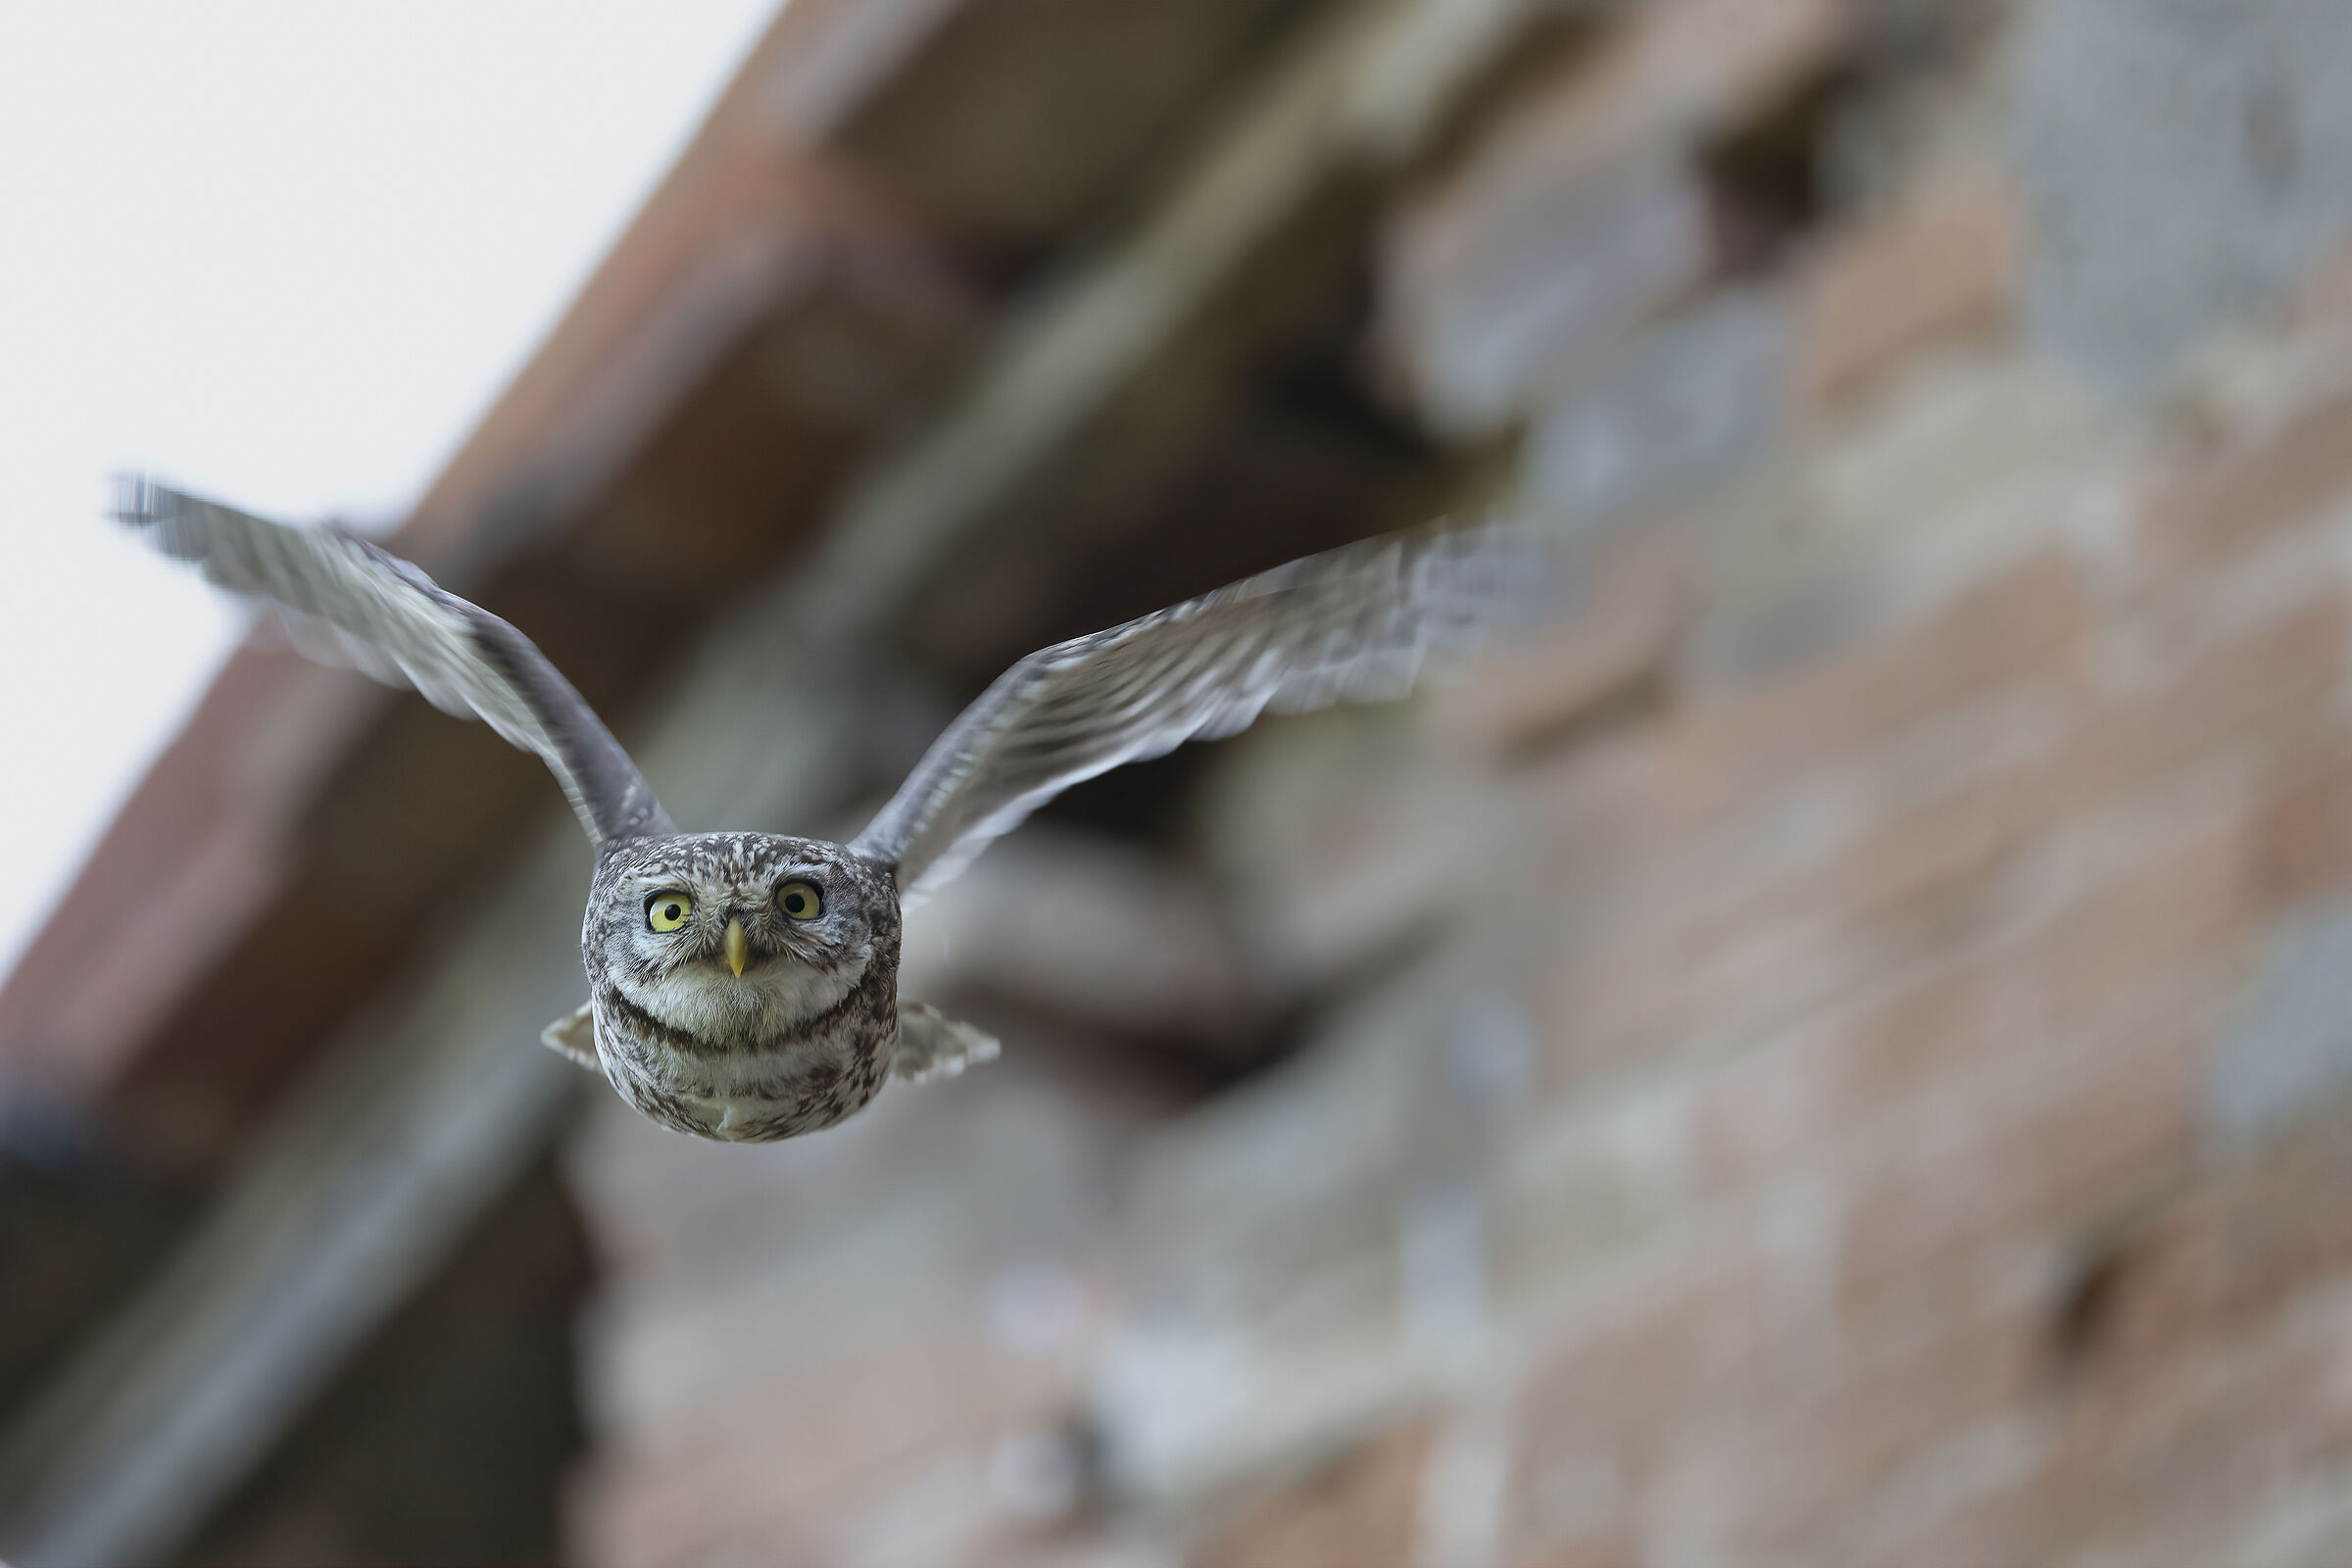 Fly little owl......